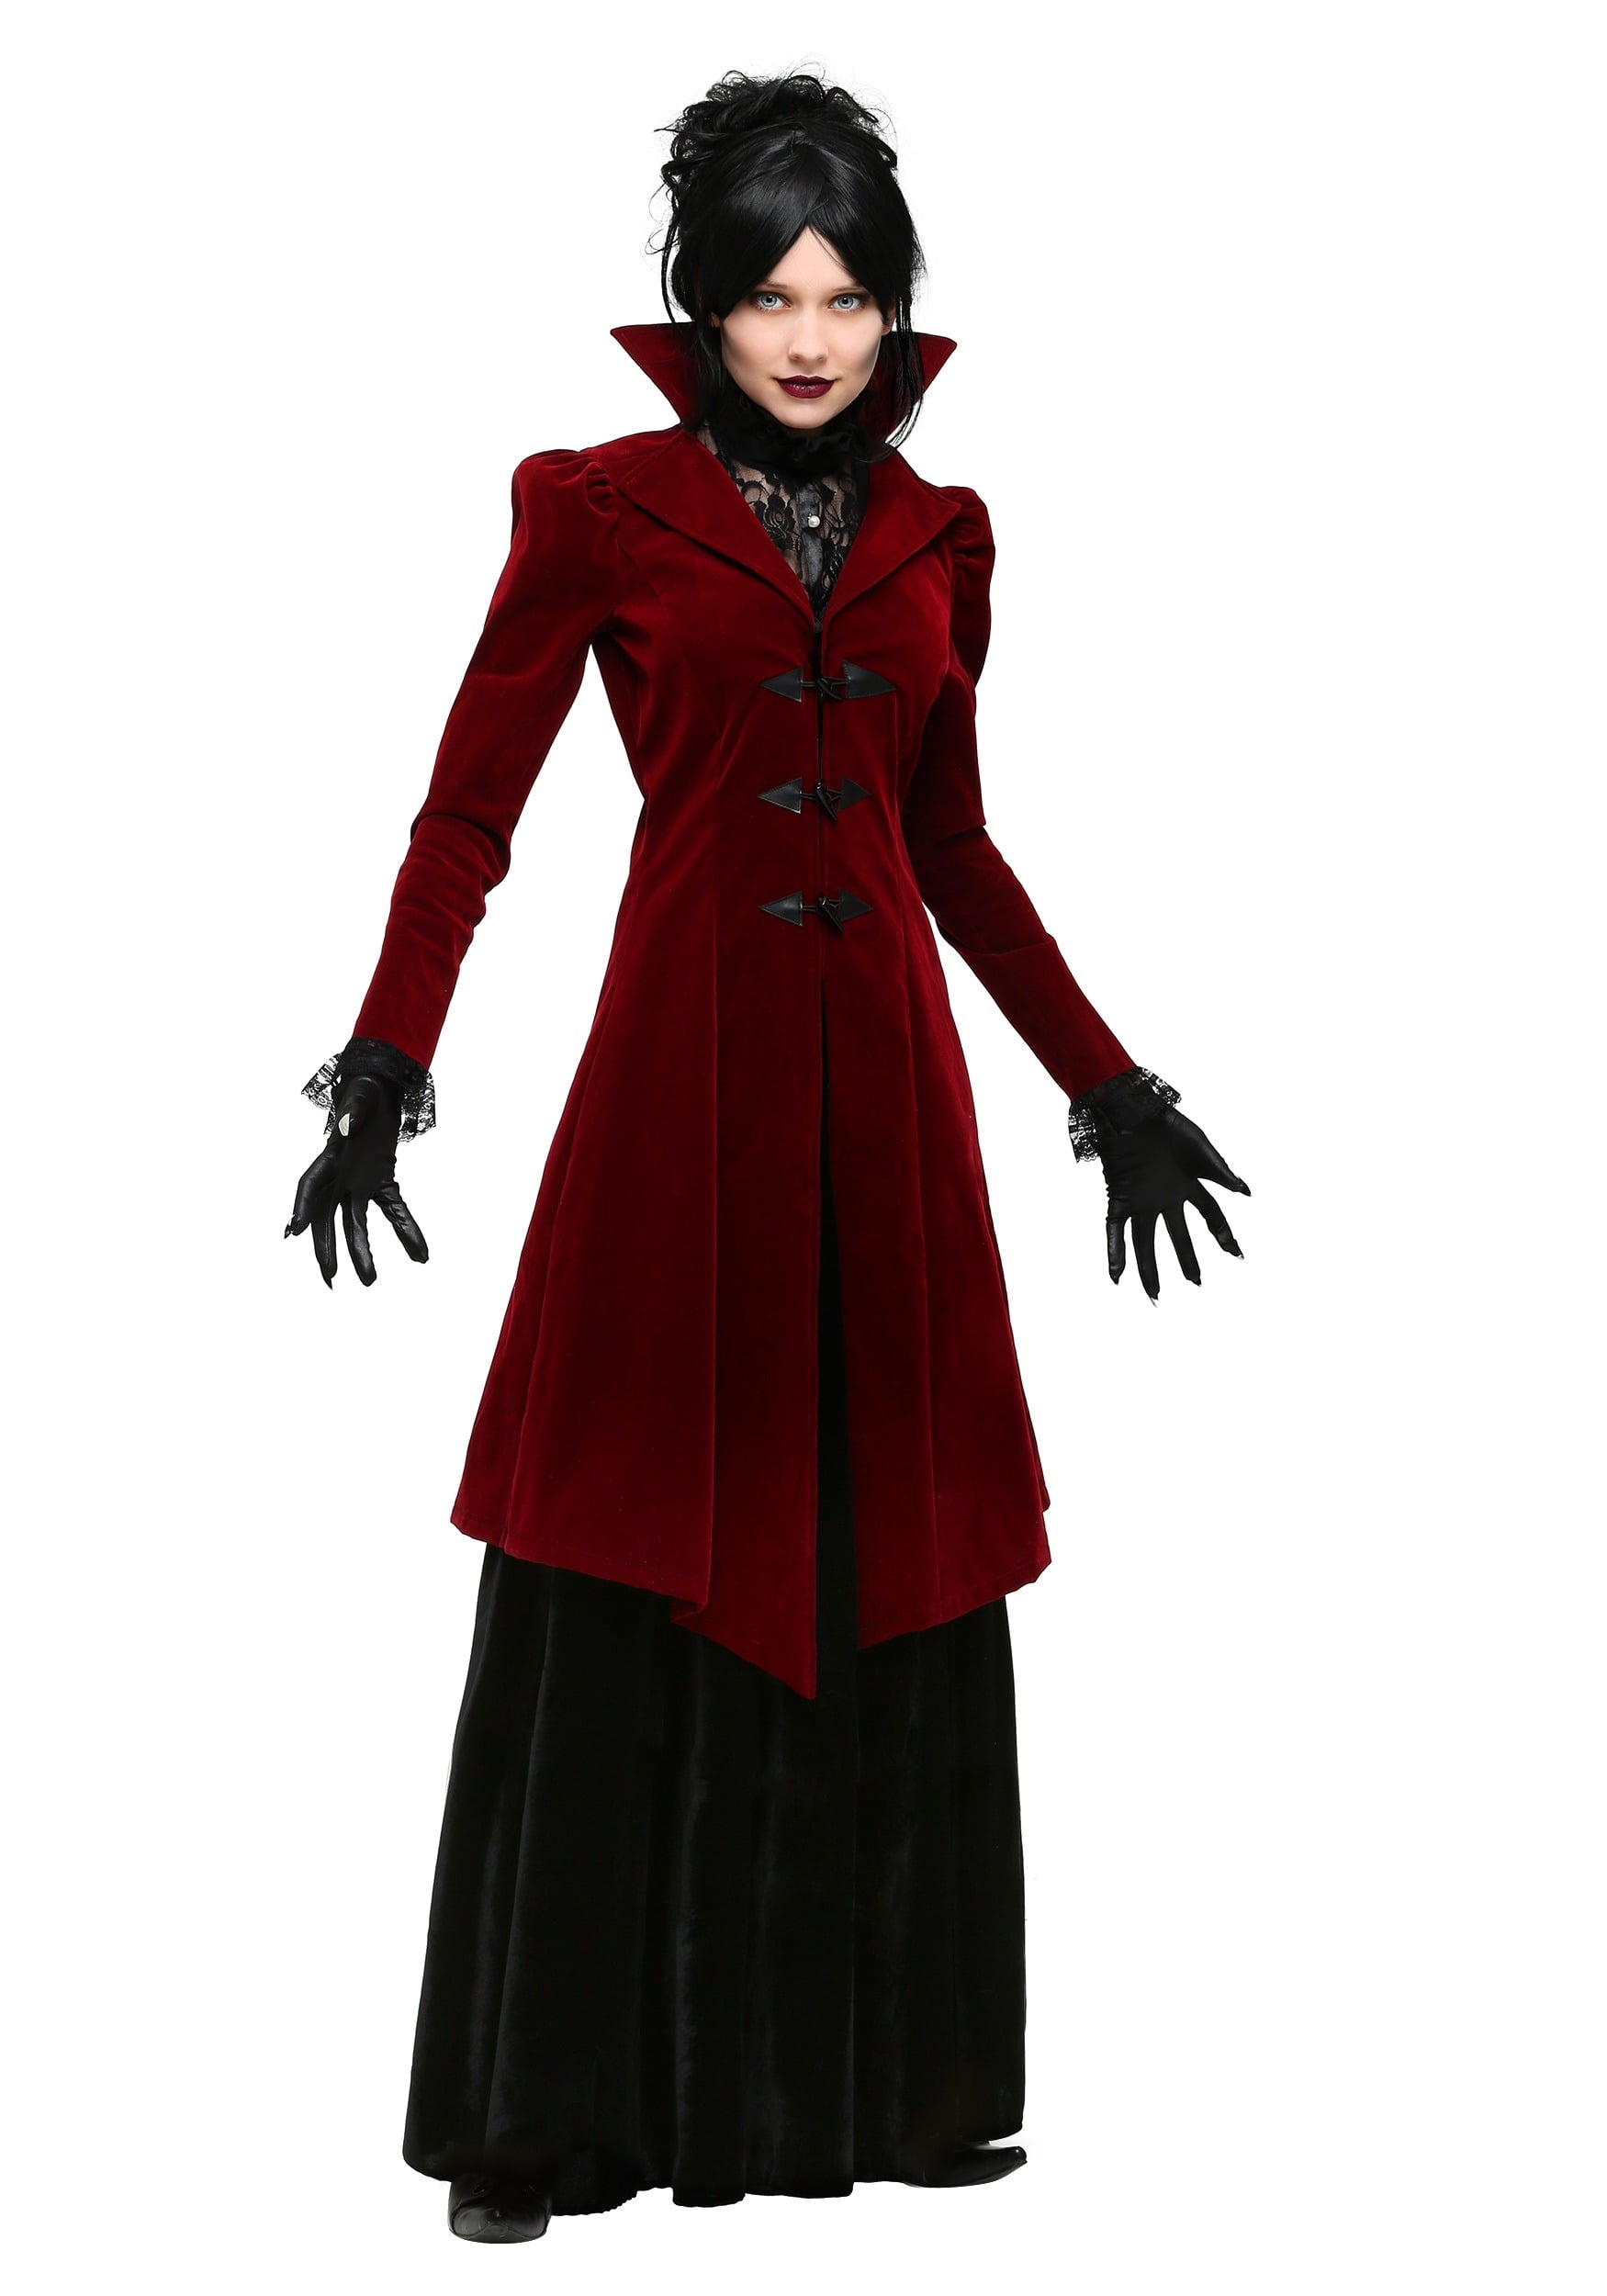 Vampire Wmens Costume Halloween Fancy Dress  Adult Plus Size Dark Temptress